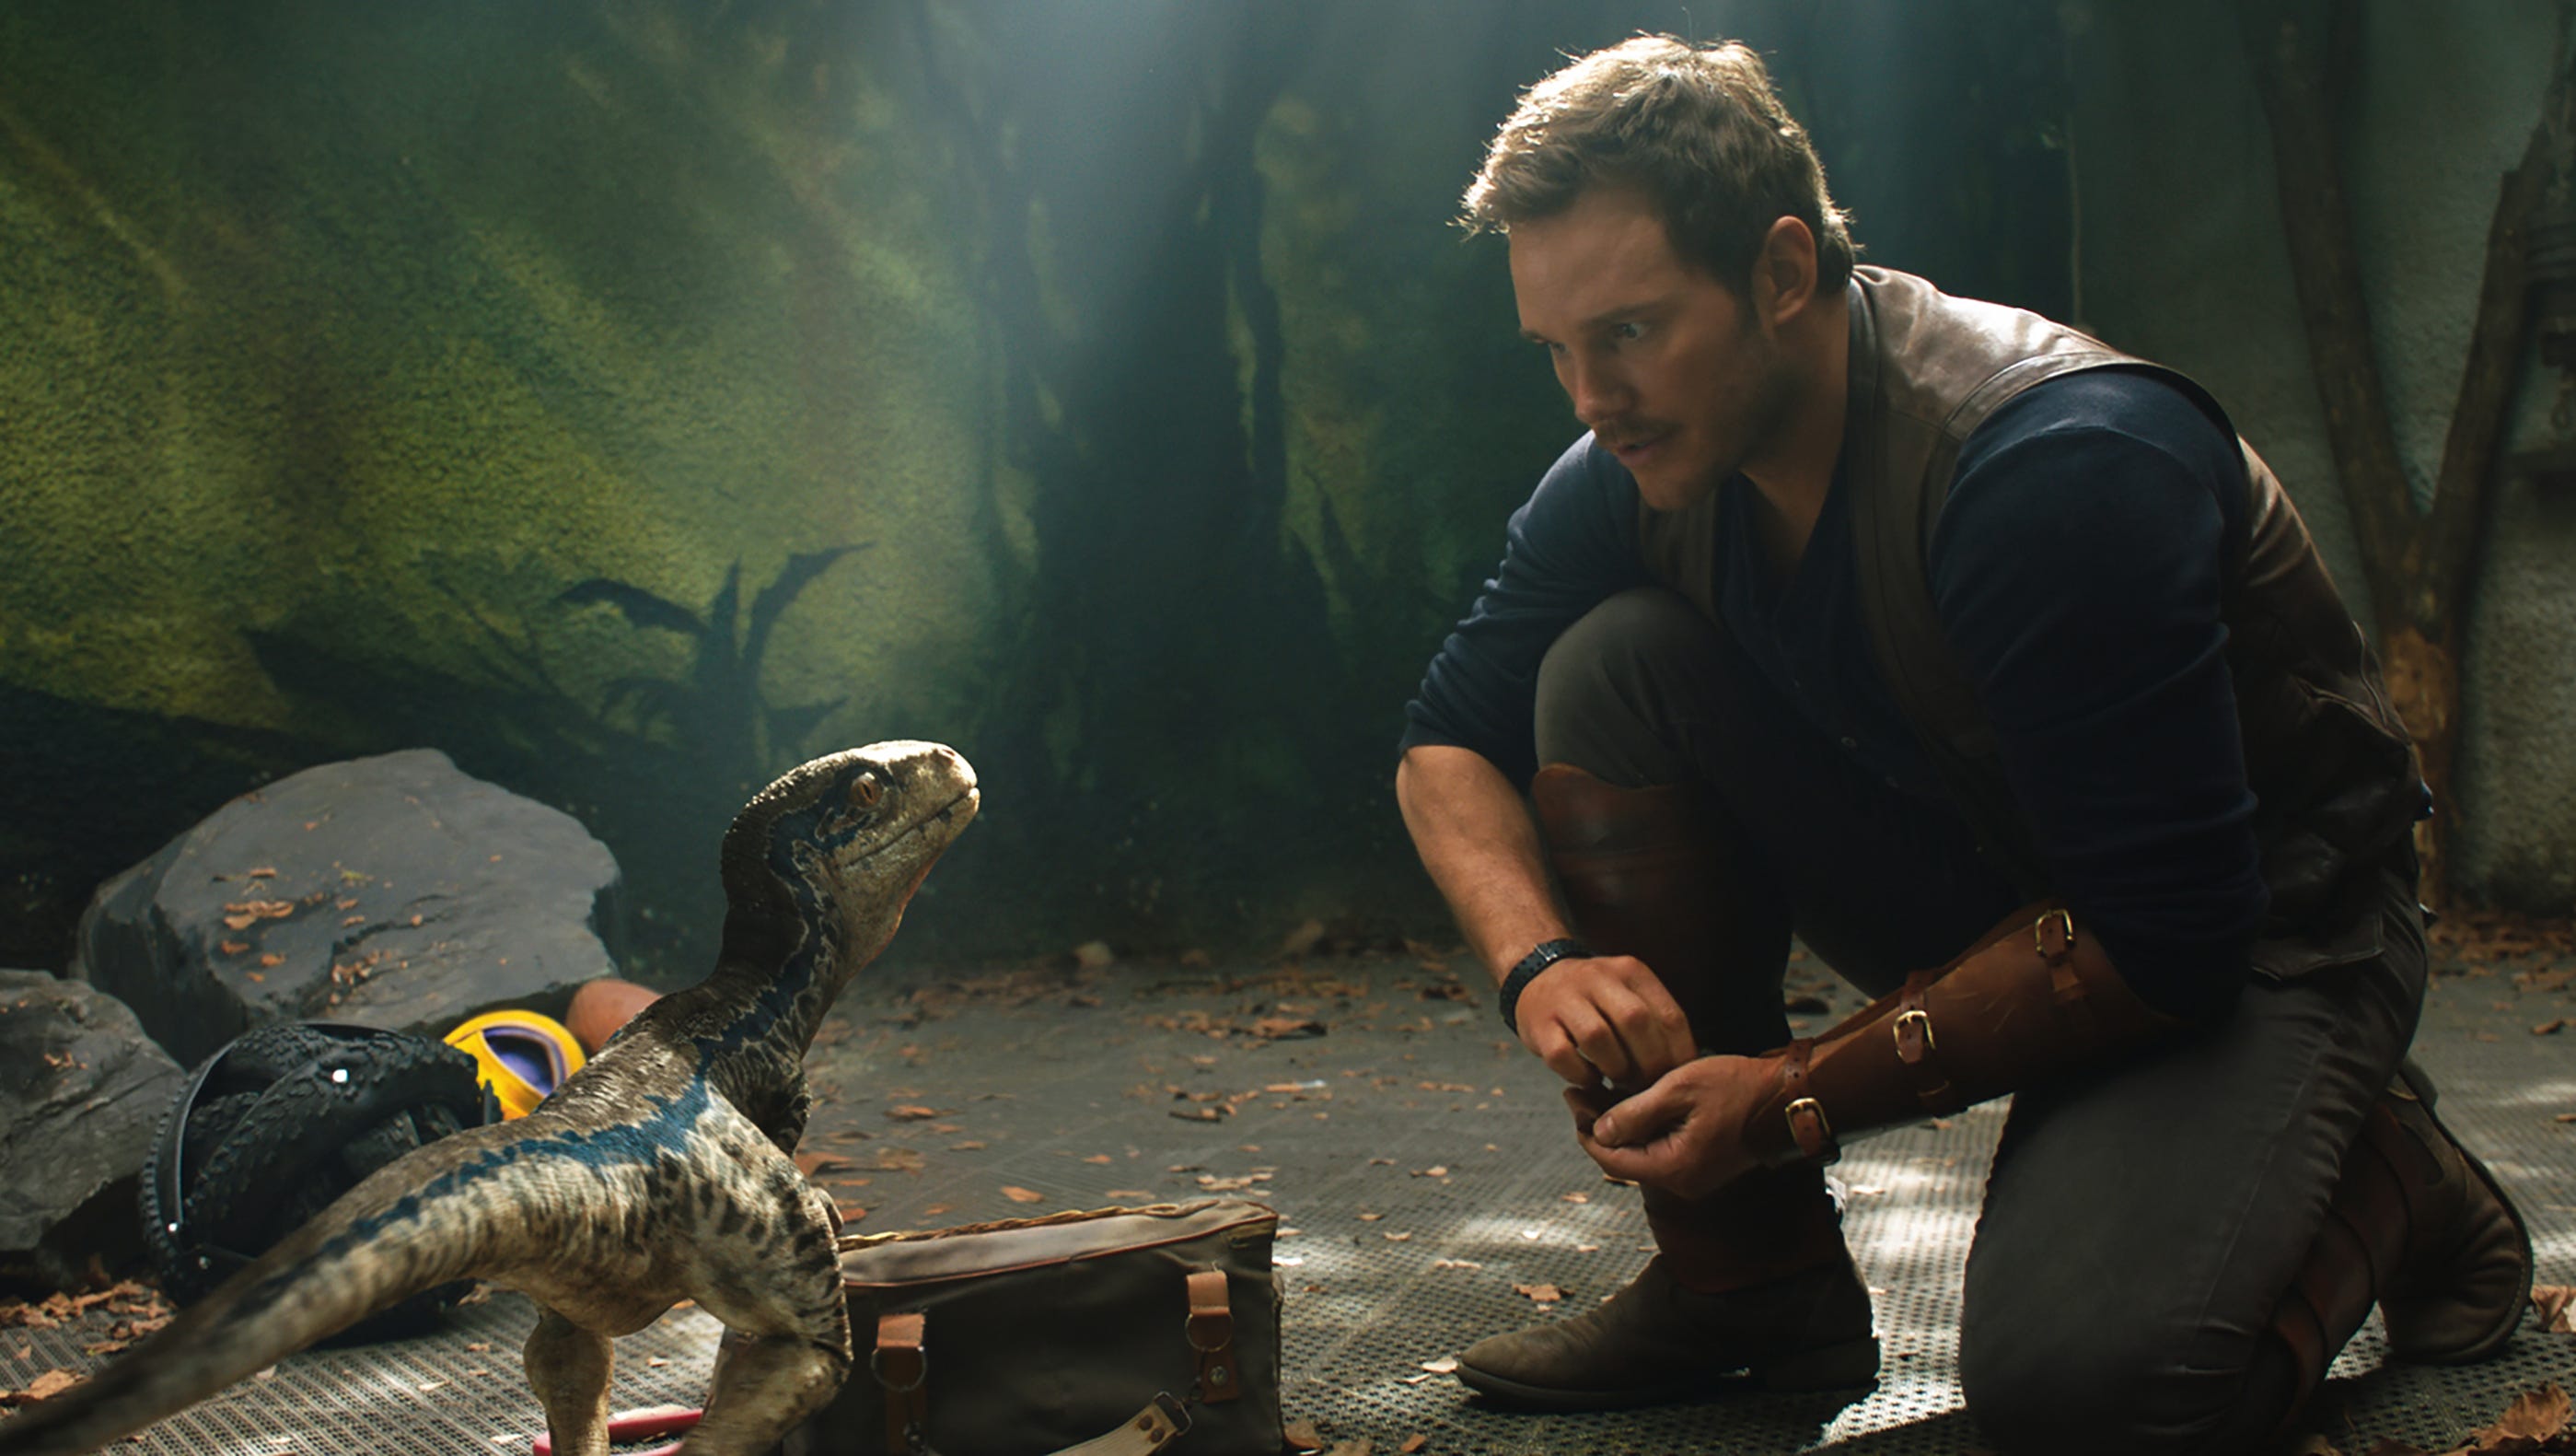 Jurassic World' sequel: Stars speak fondly about dinosaur co-stars